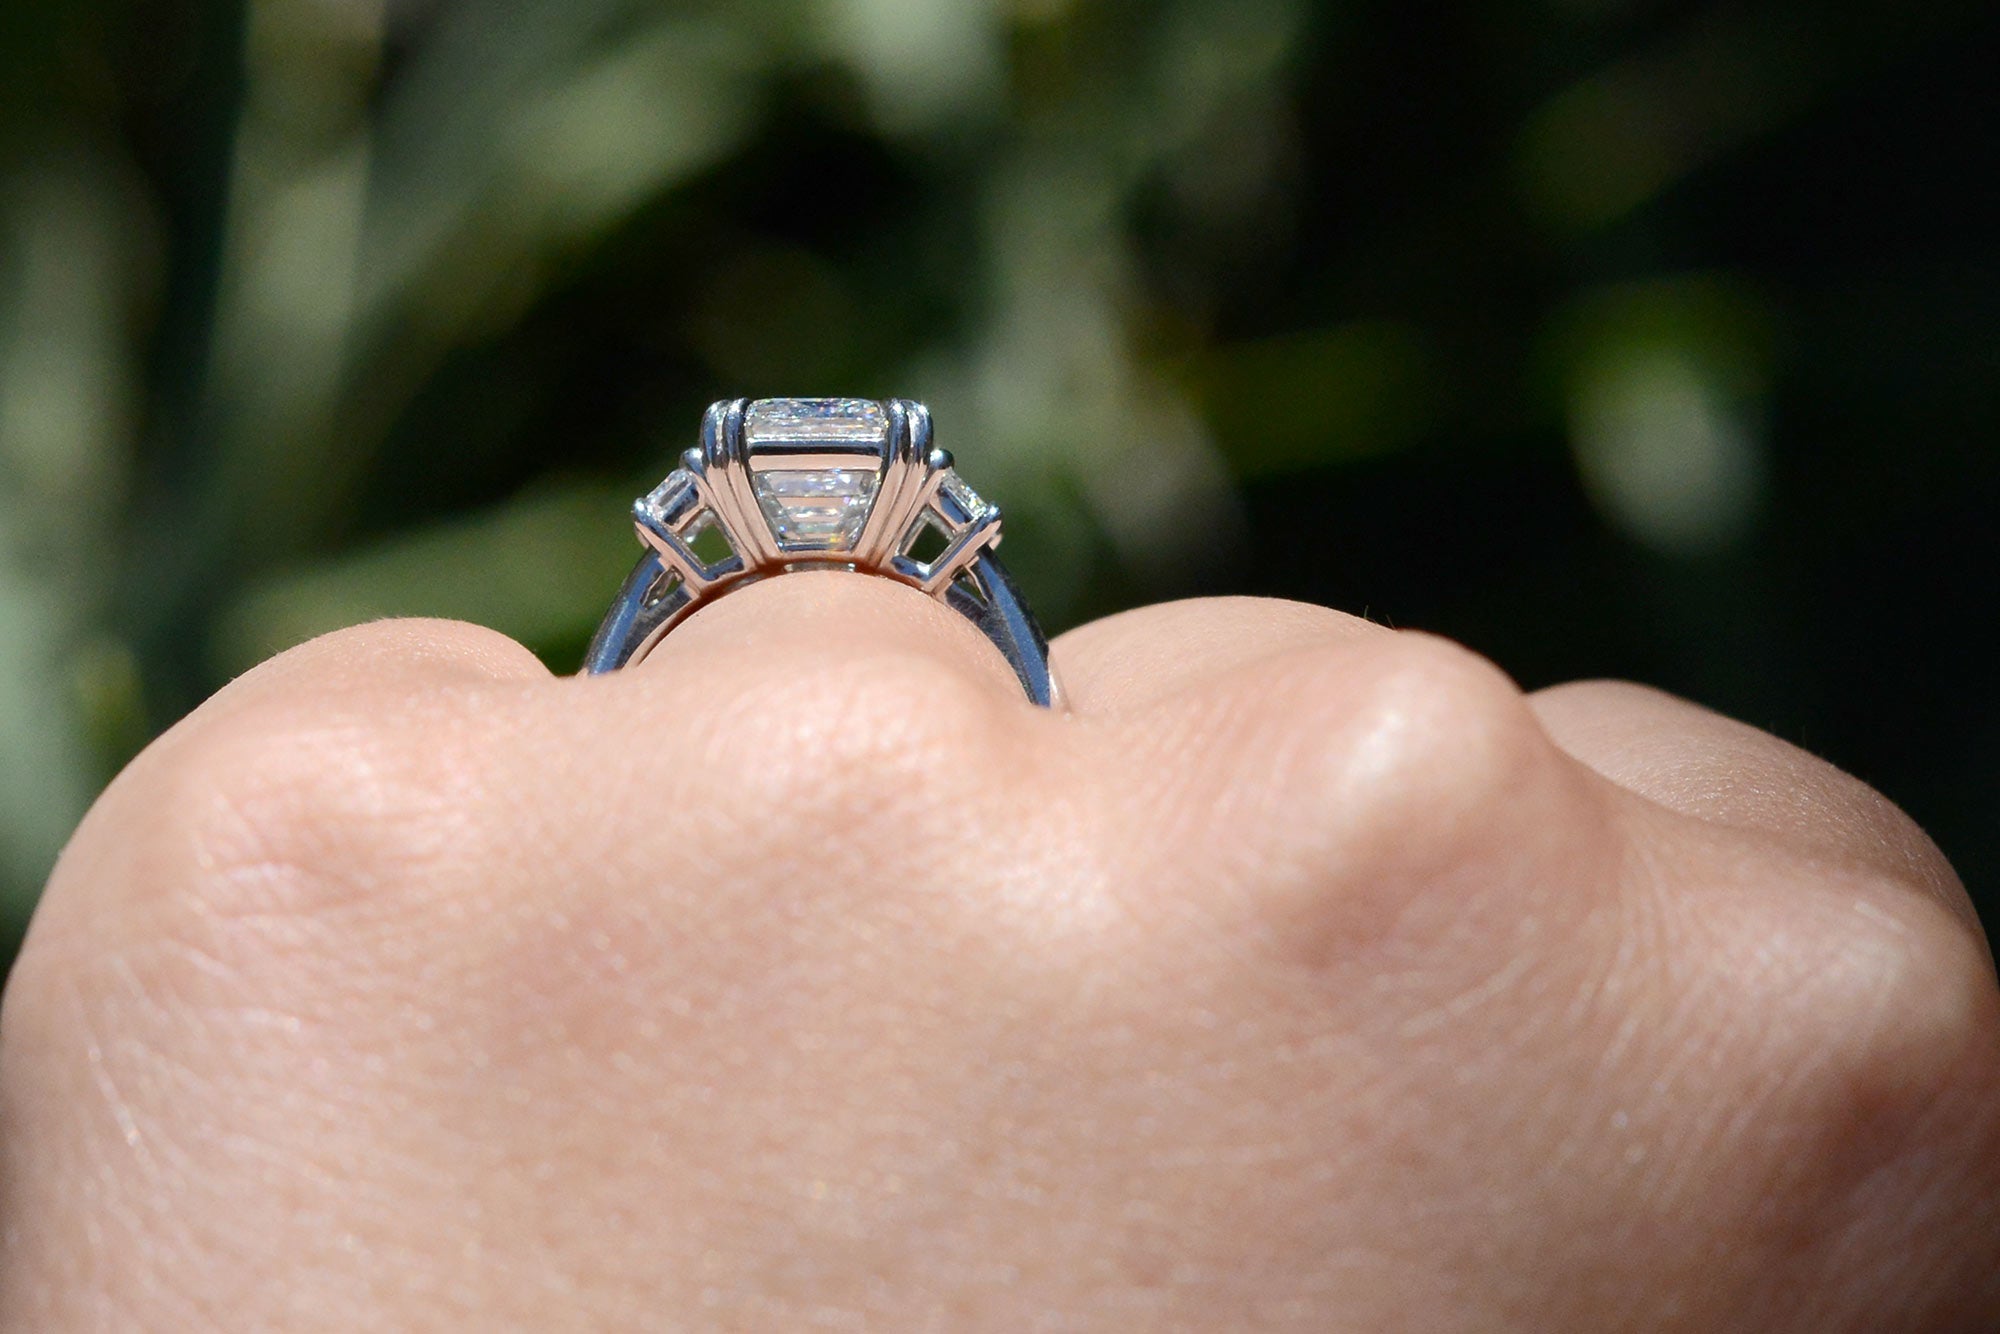 GIA Certified 5.01 Carat Emerald Cut Diamond Engagement Ring